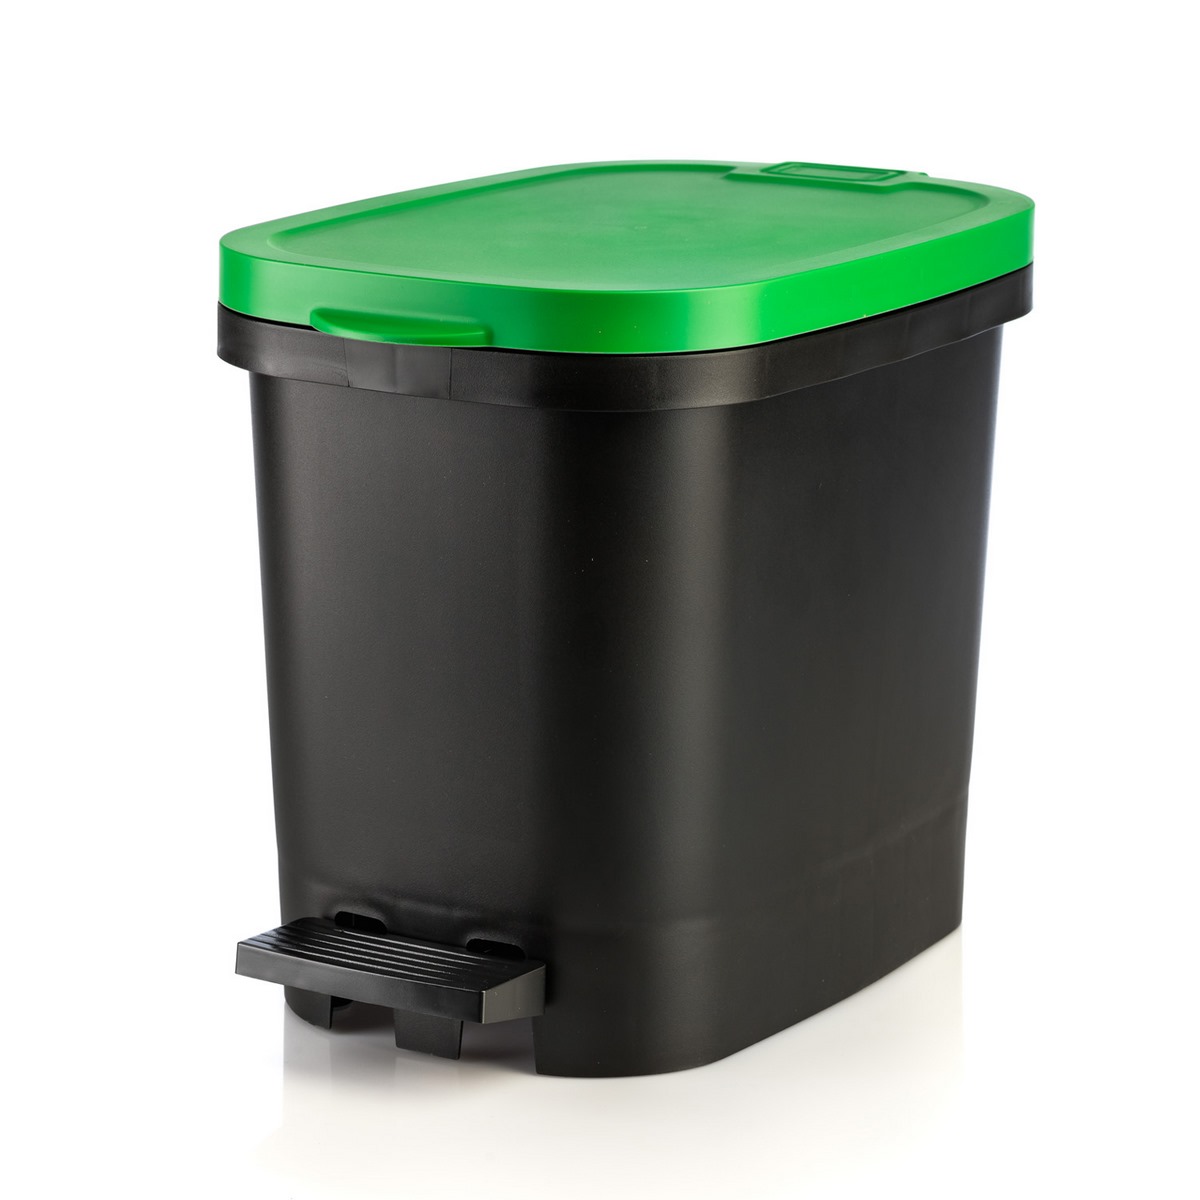 Мусорный бак с педалью BE-UTIL black green, 23х30 см, 35 см, 10 л, Пластик, Faplana, Португалия